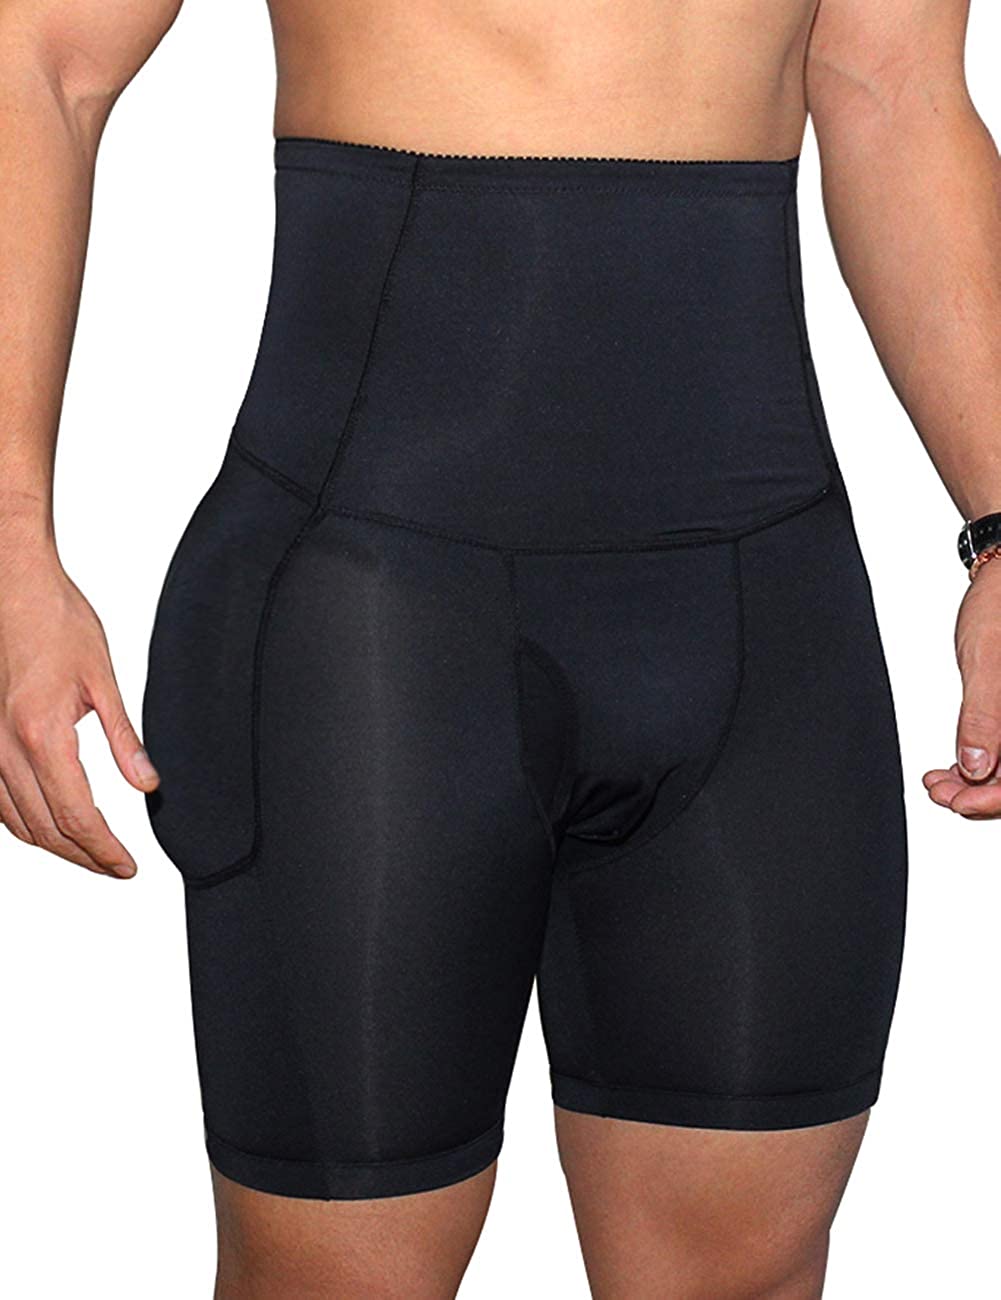 Men's Tummy Control Slimming Shorts High Waist Body Shaper Trimming ...